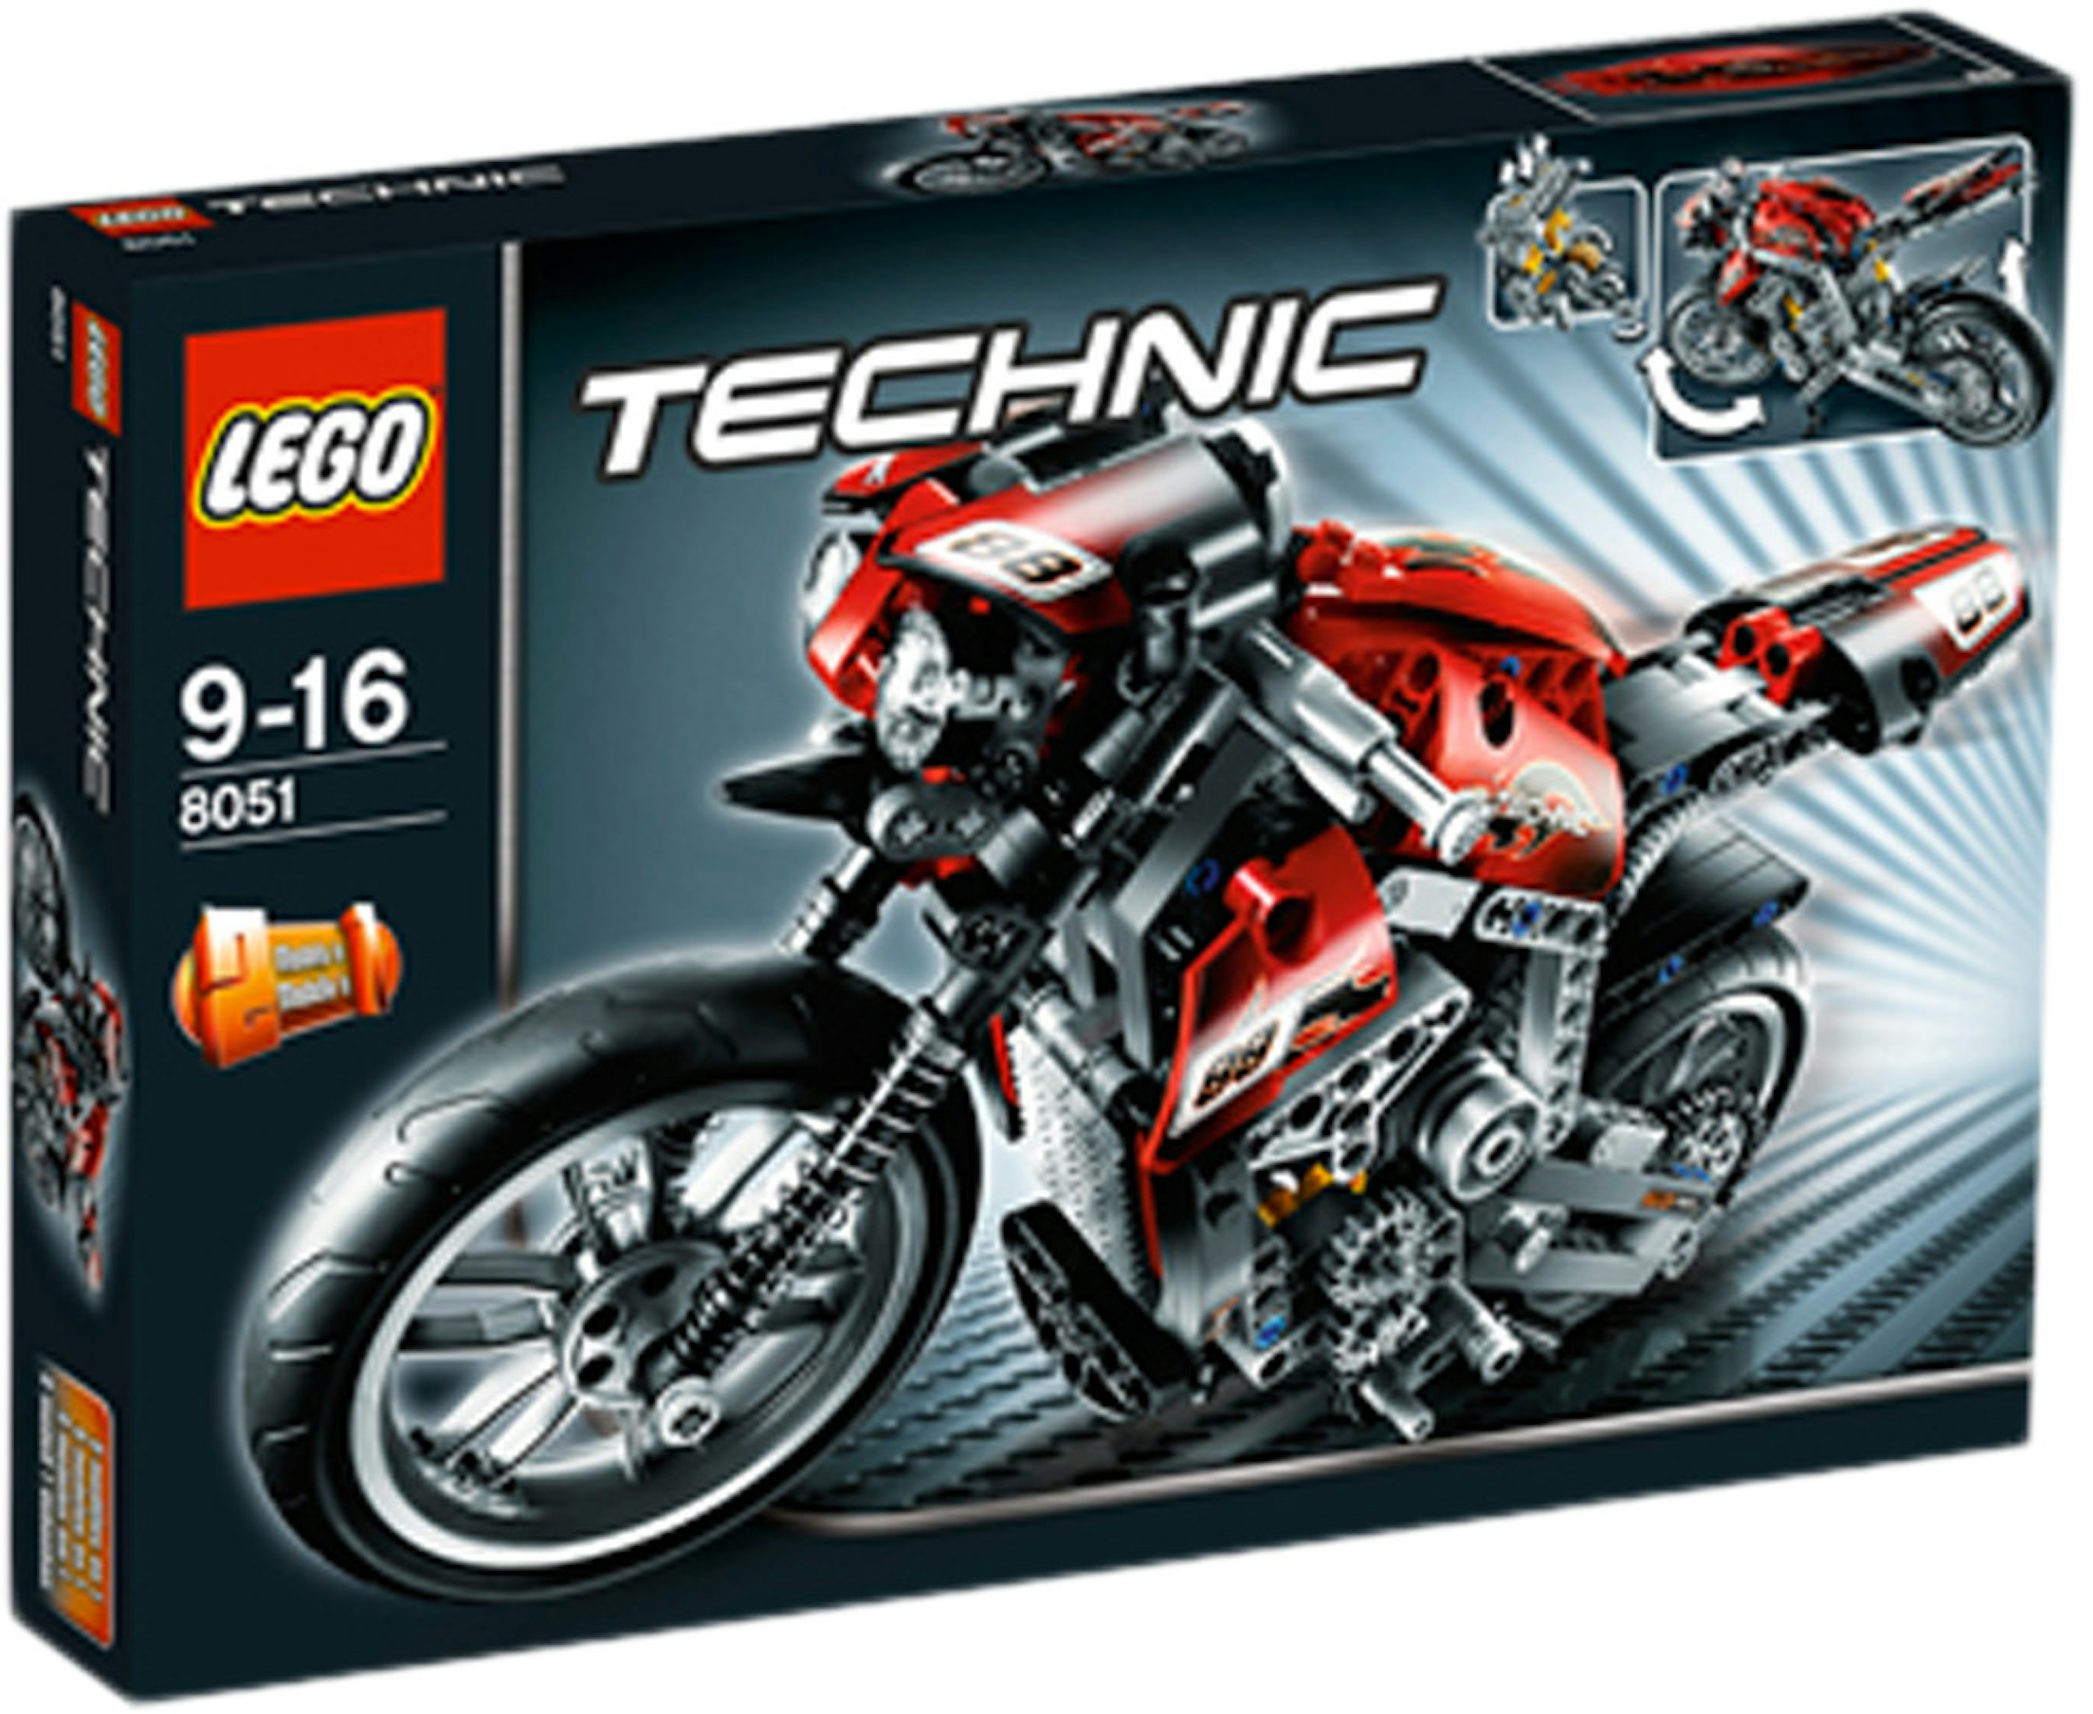 https://images.stockx.com/images/LEGO-Technic-Motorbike-Set-8051.jpg?fit=fill&bg=FFFFFF&w=1200&h=857&fm=jpg&auto=compress&dpr=2&trim=color&updated_at=1643125507&q=60